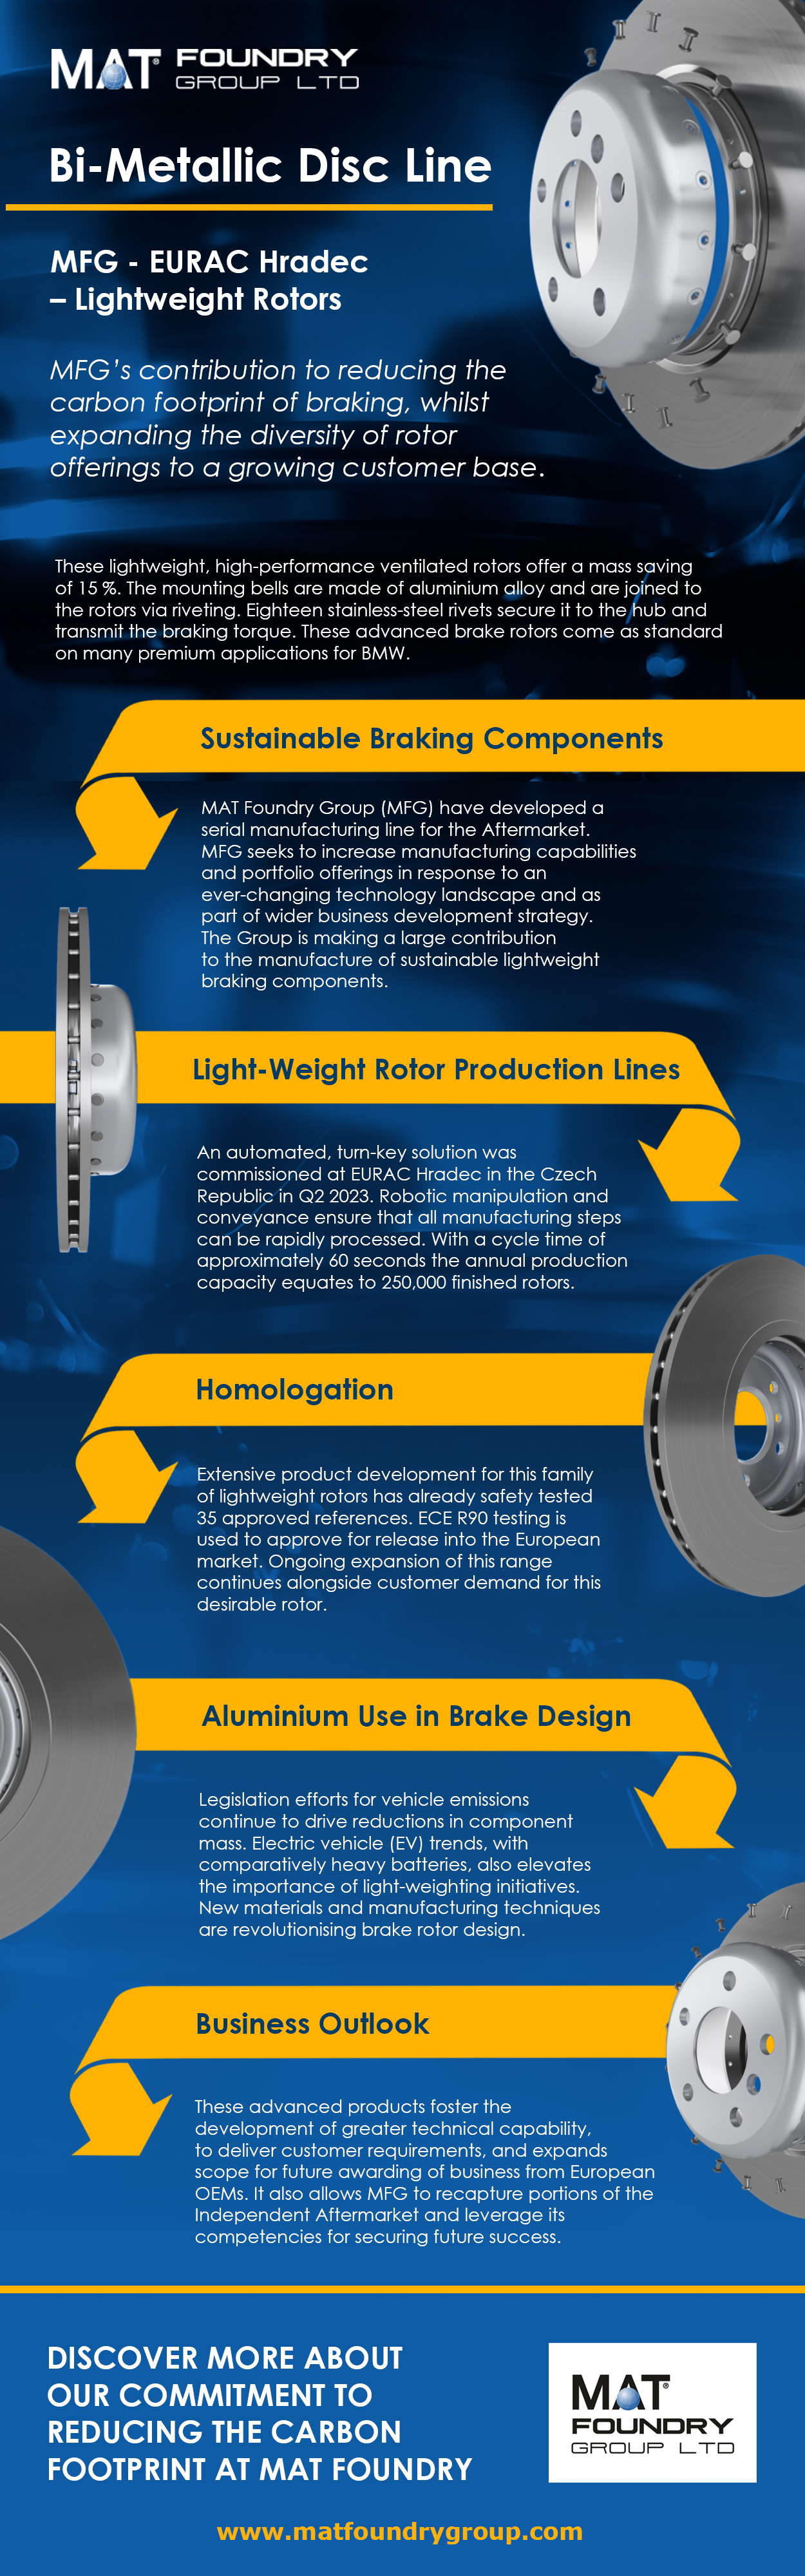 Bi-Metallic Discs Infographic - MAT Foundry